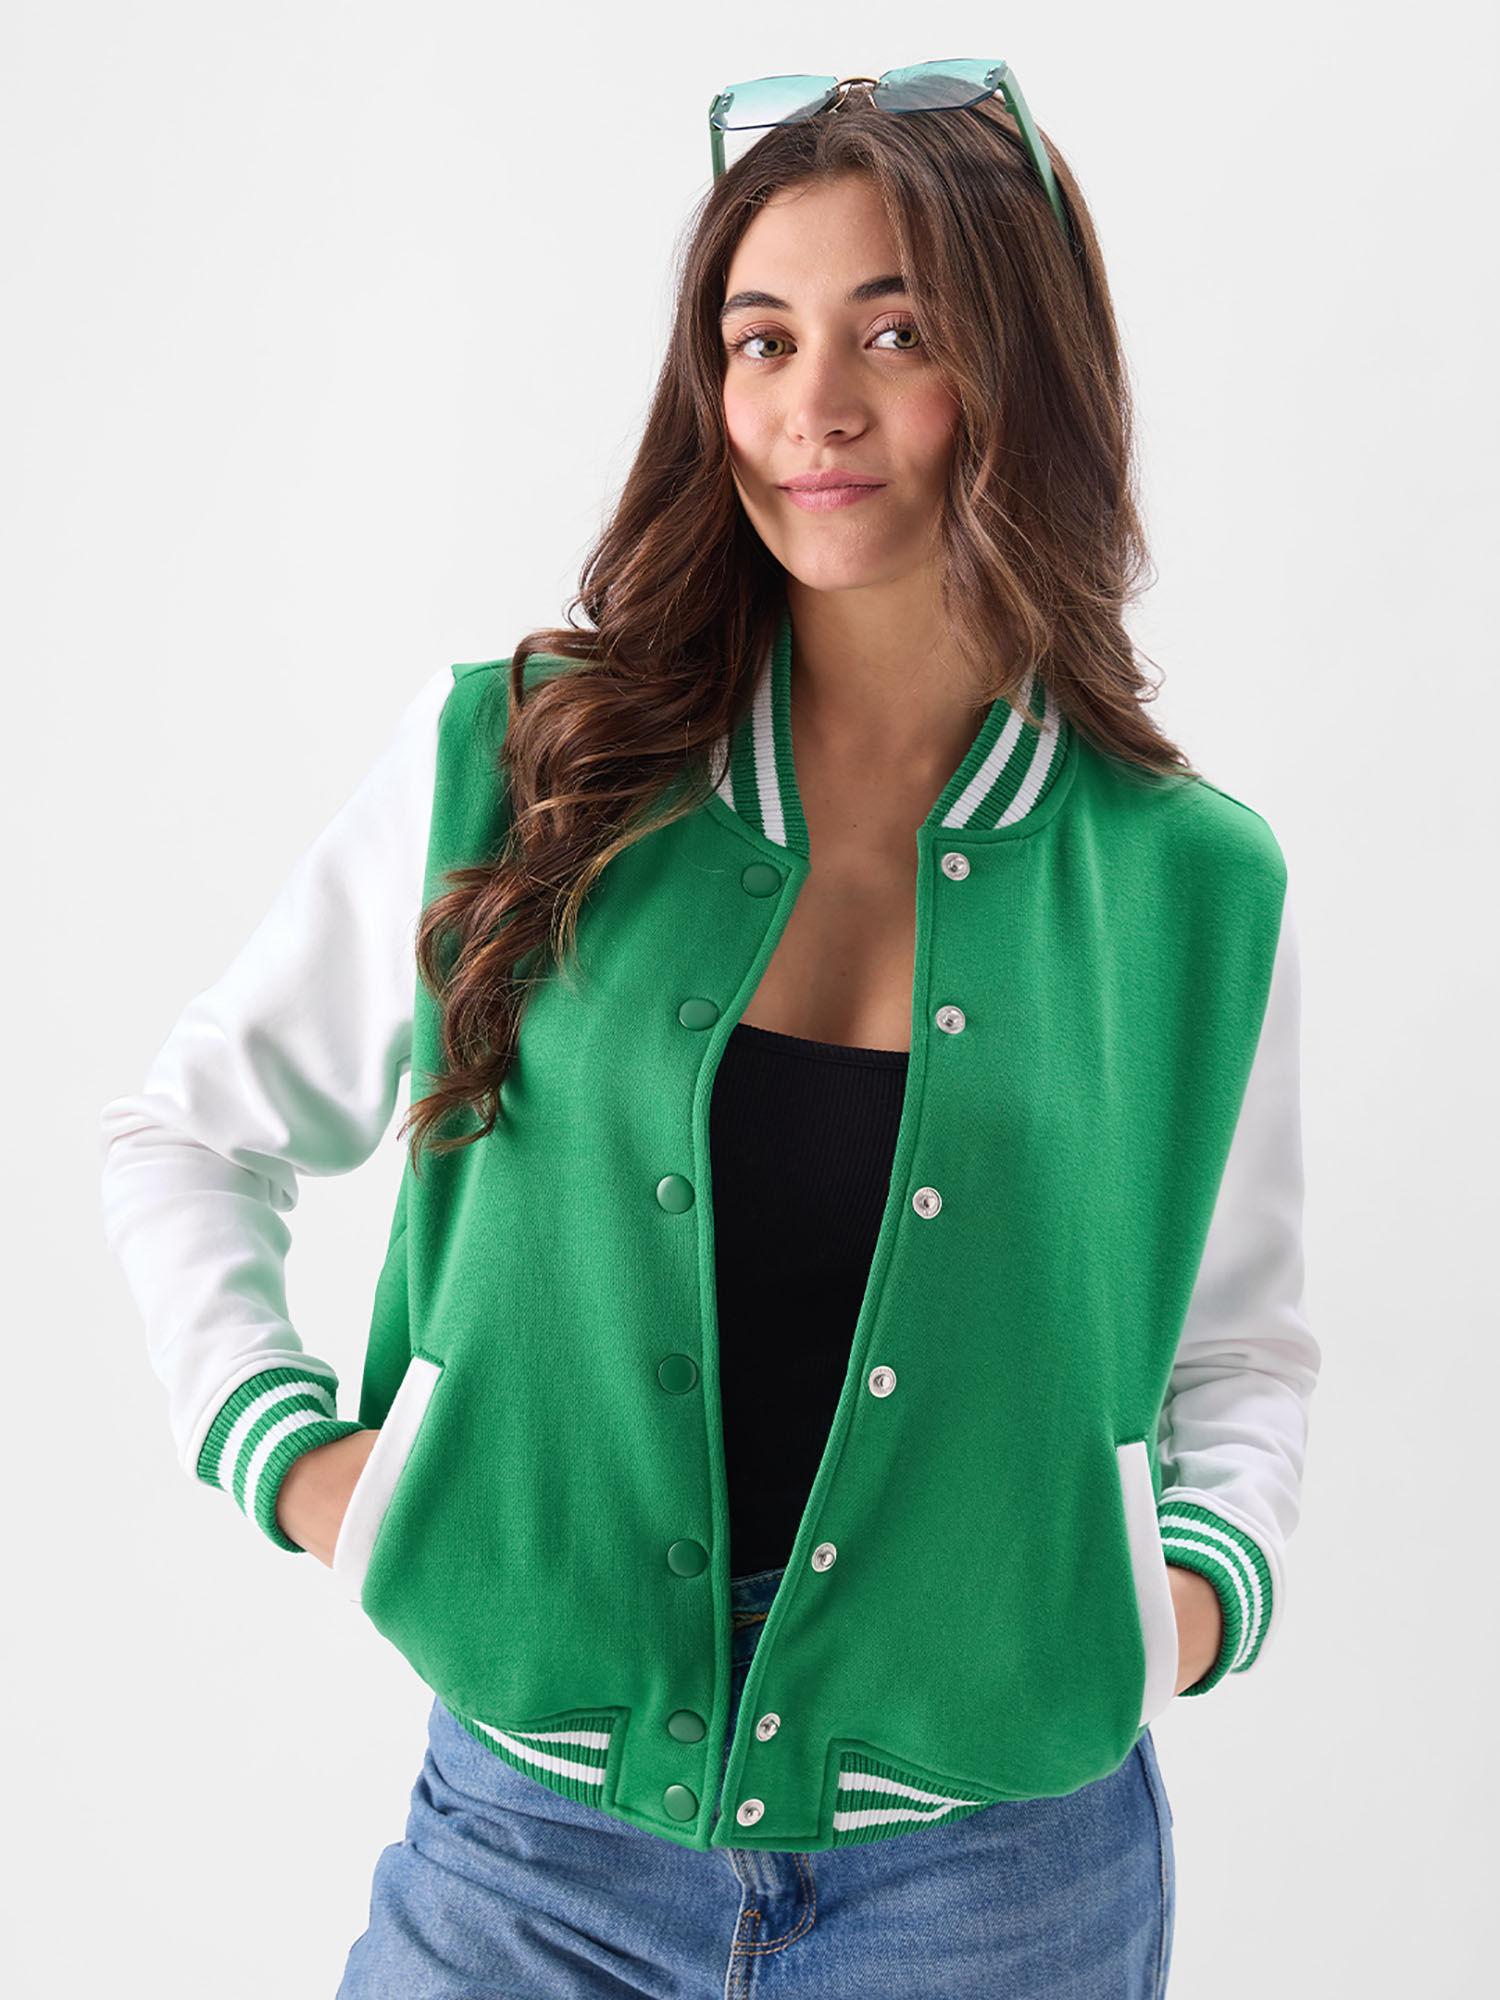 original solid green, white women varsity jackets